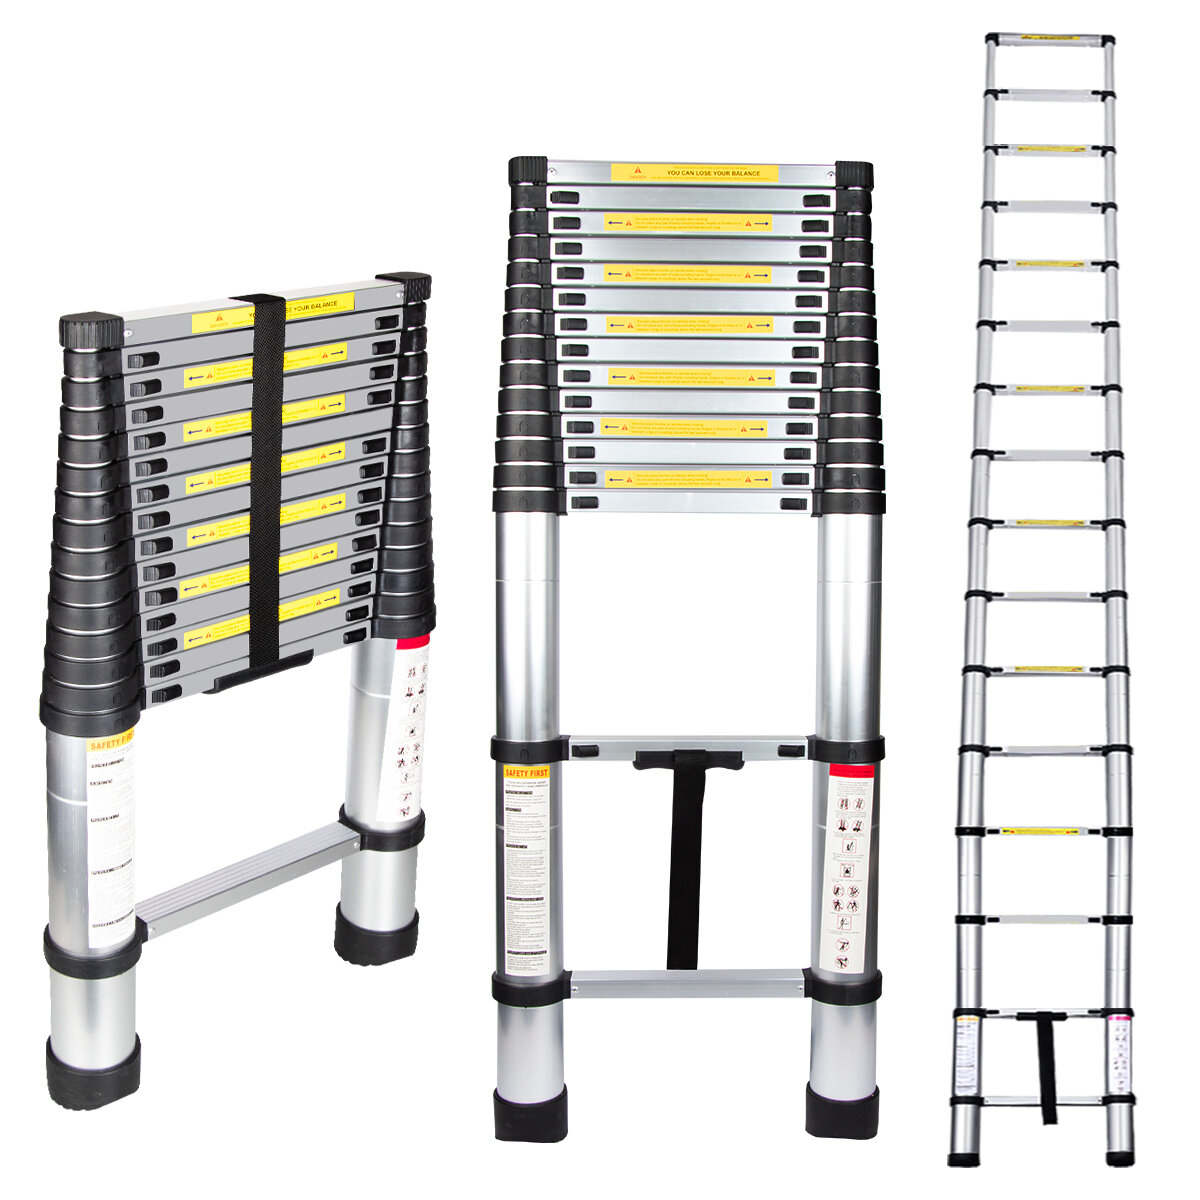 10.5 FT Aluminium Telescoping Ladder Telescopic Ladder Collapsible Ladder Telescopic Extension Ladders for Home Multi-Purpose Portable Heavy Duty Steps Anti-Slip Rubber Feet Use Roof RV 330lbs